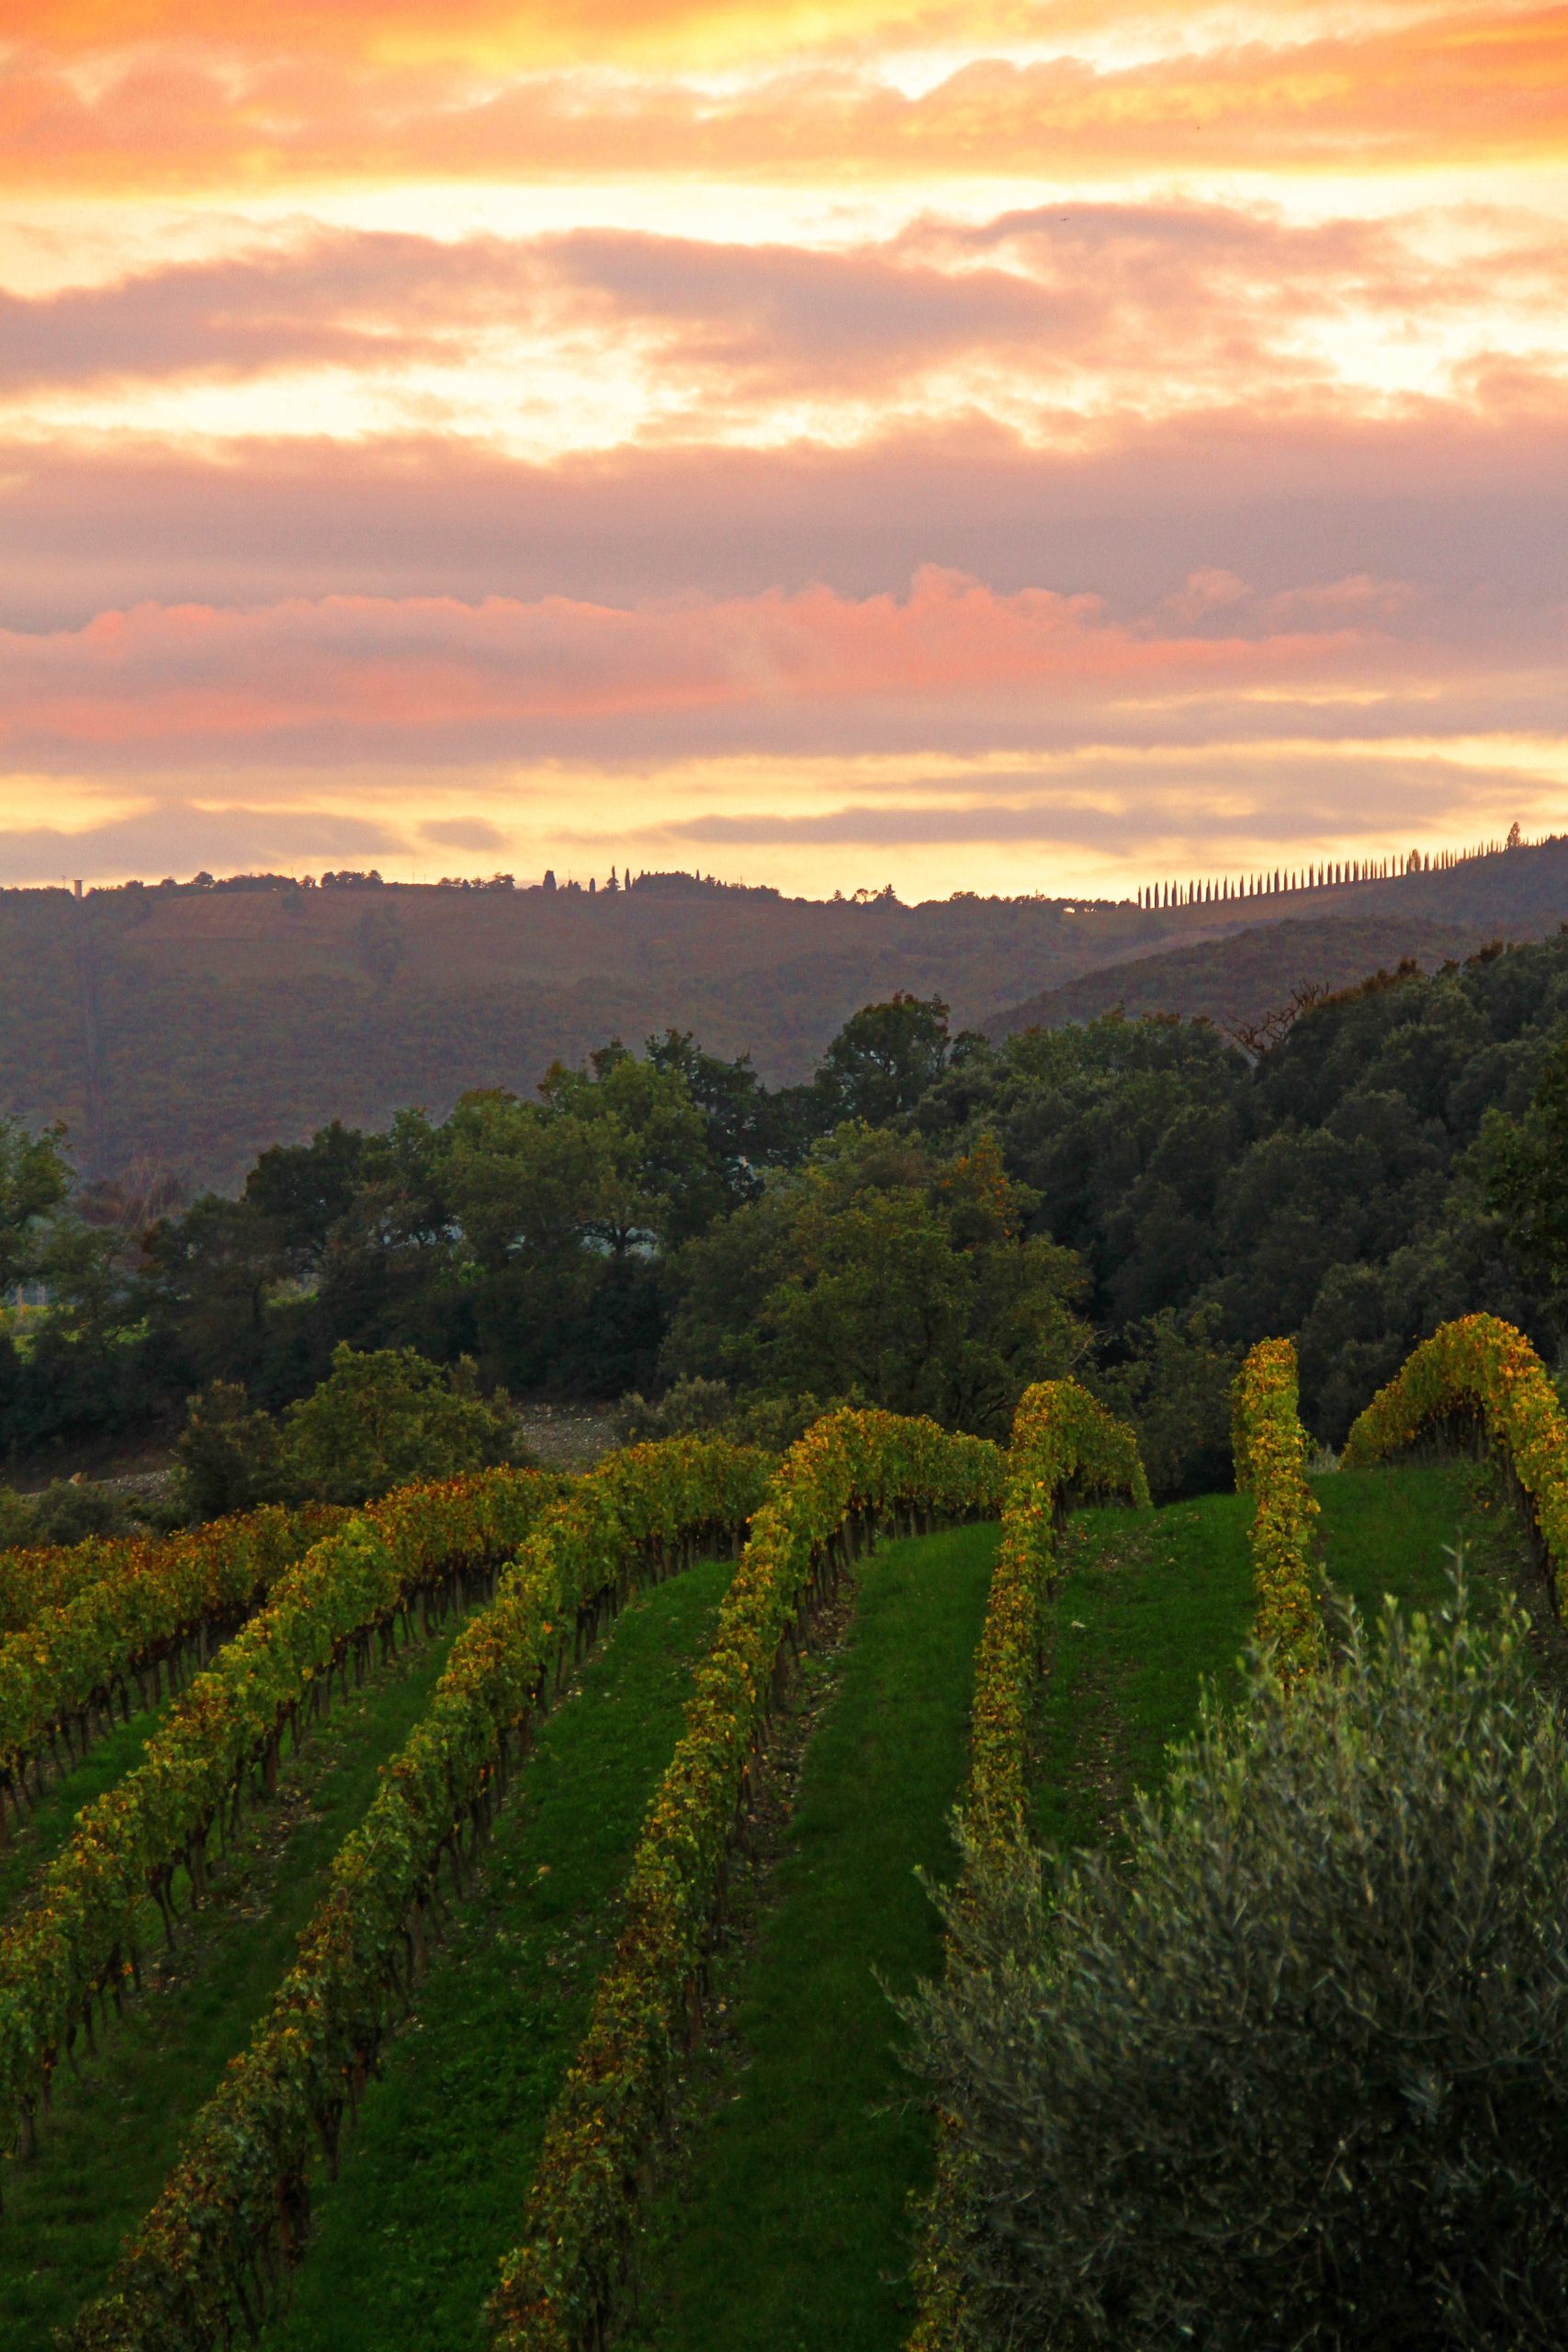 Grapevines at sunset near Montalcino